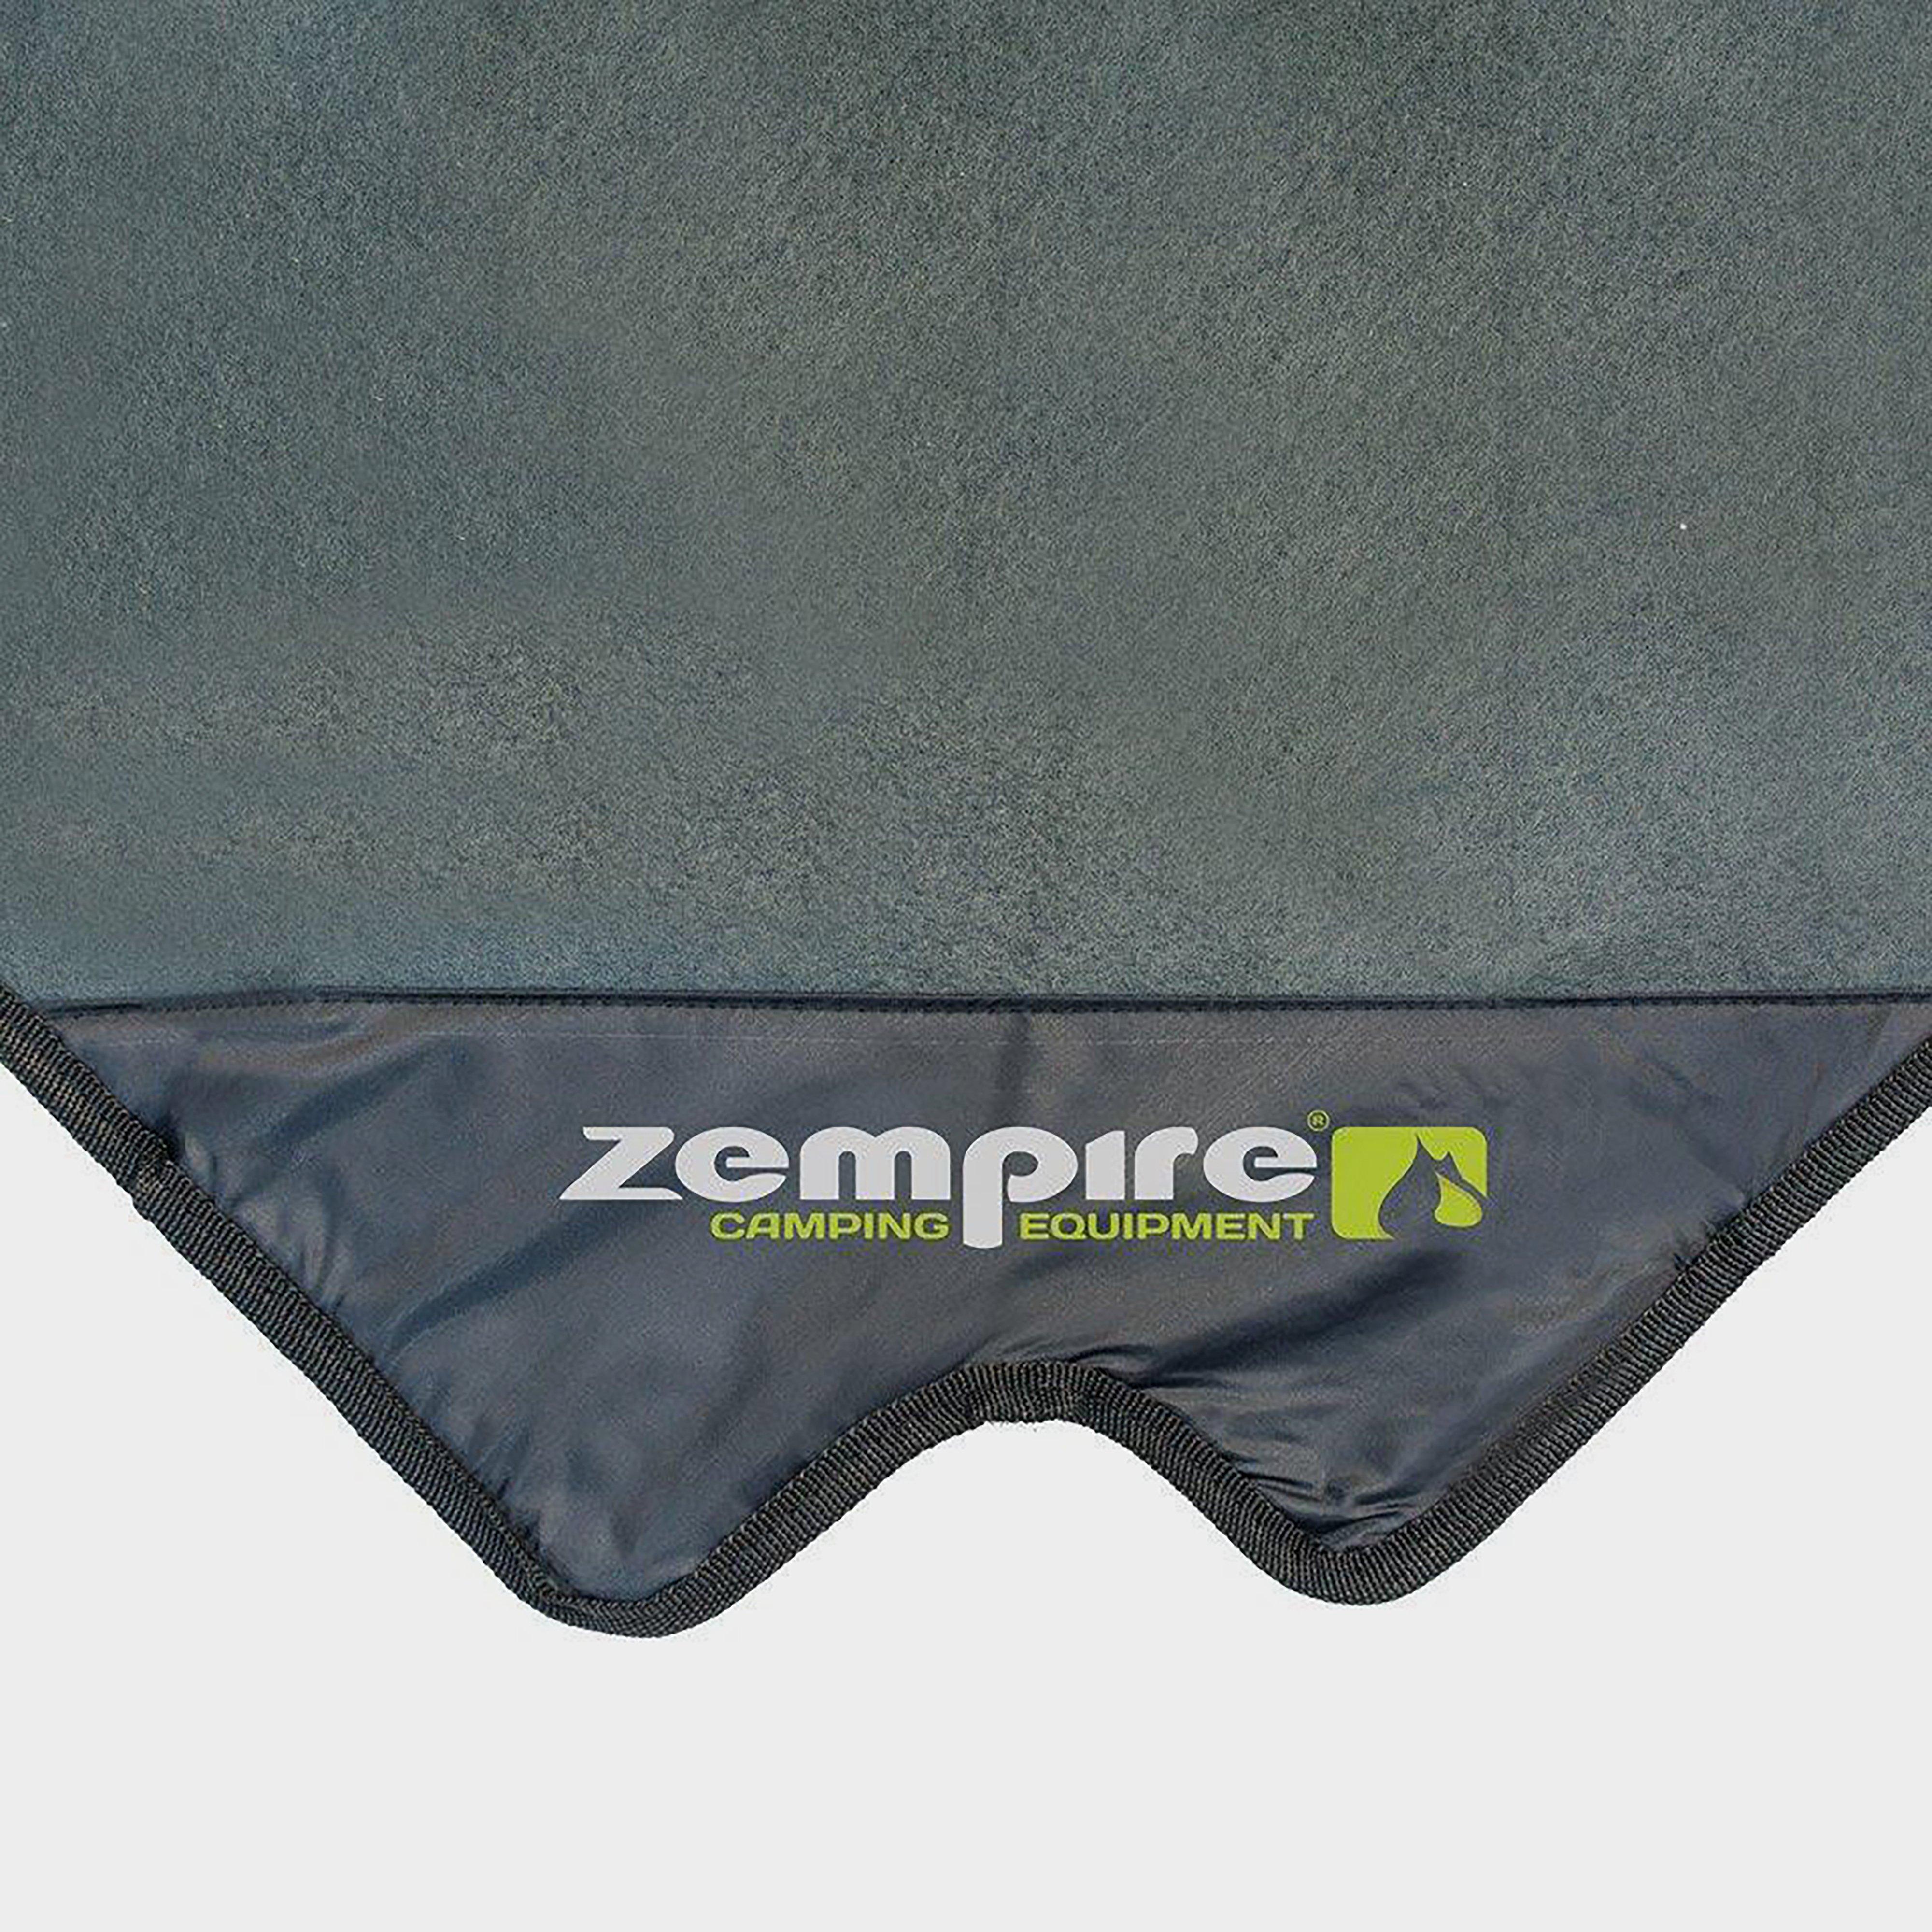 Zempire Aerodome II Pro Carpet Review